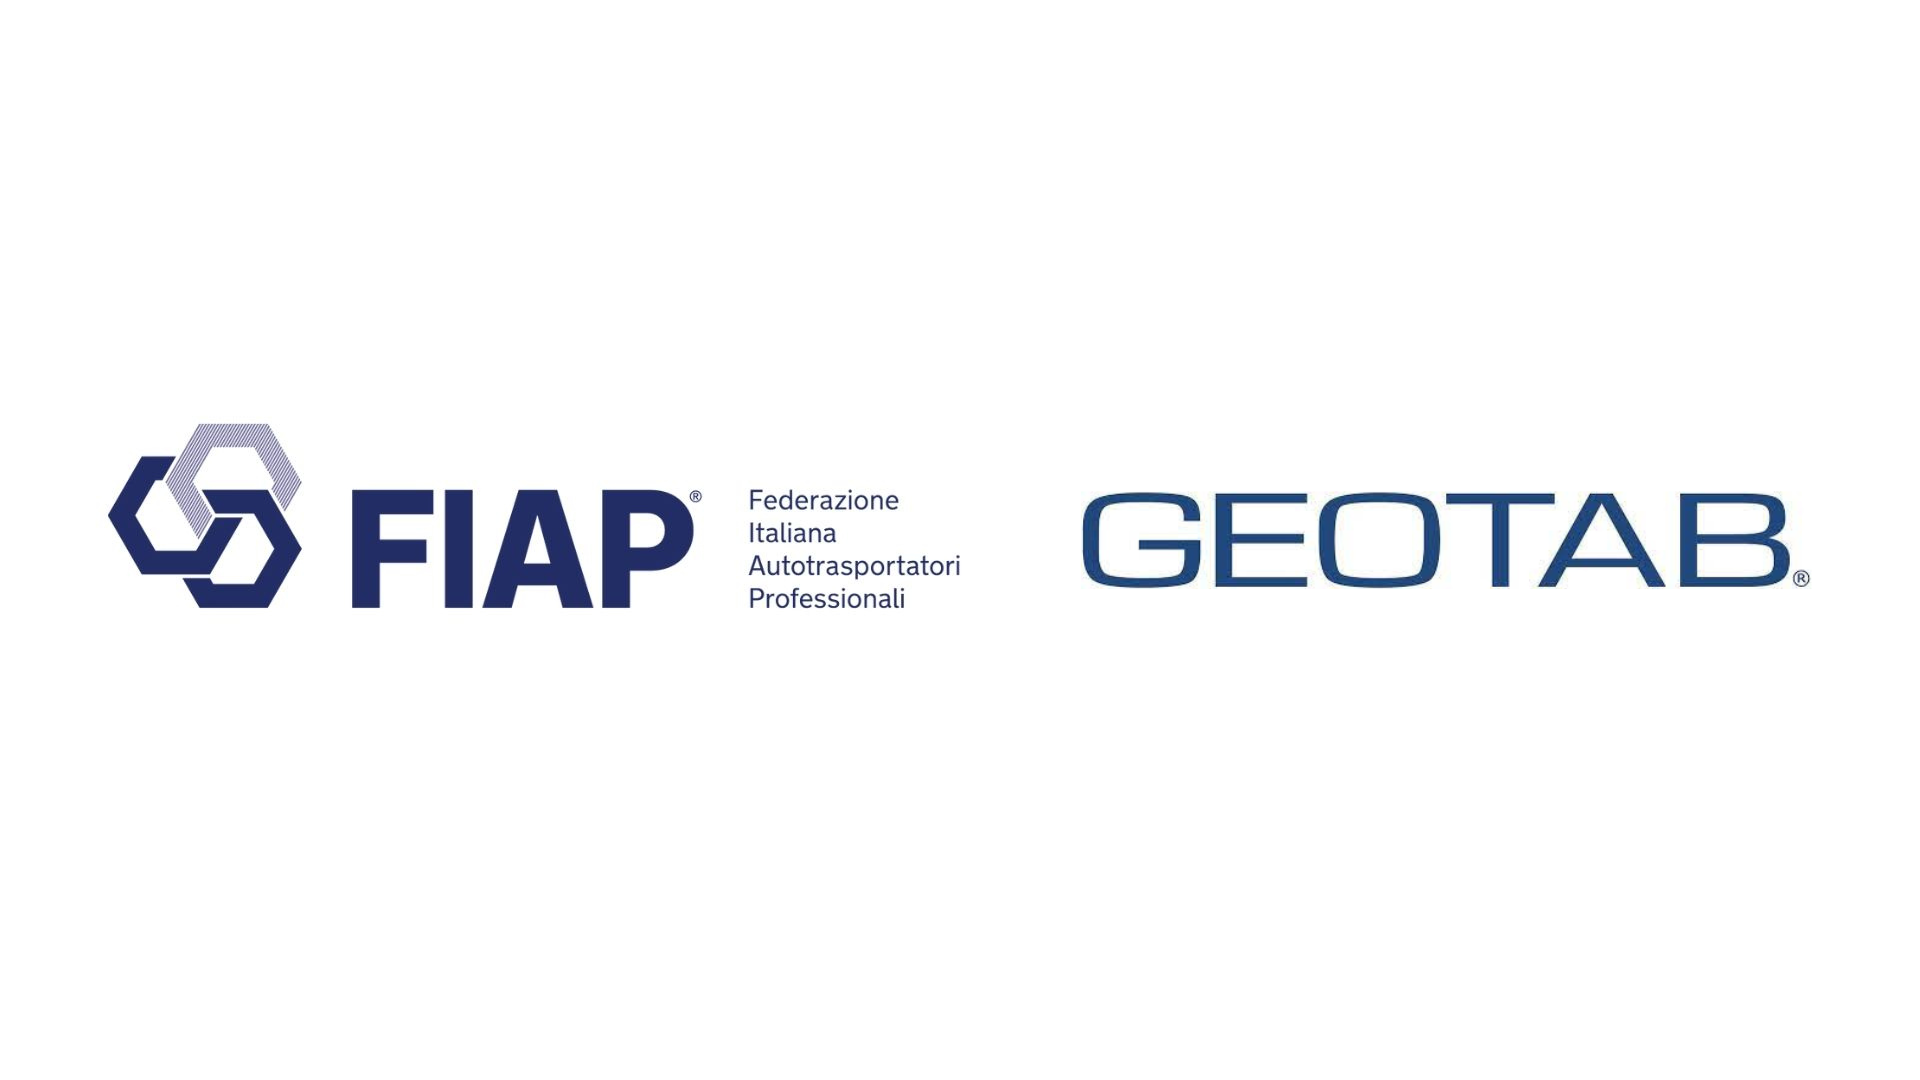 FIAP and Geotab logos